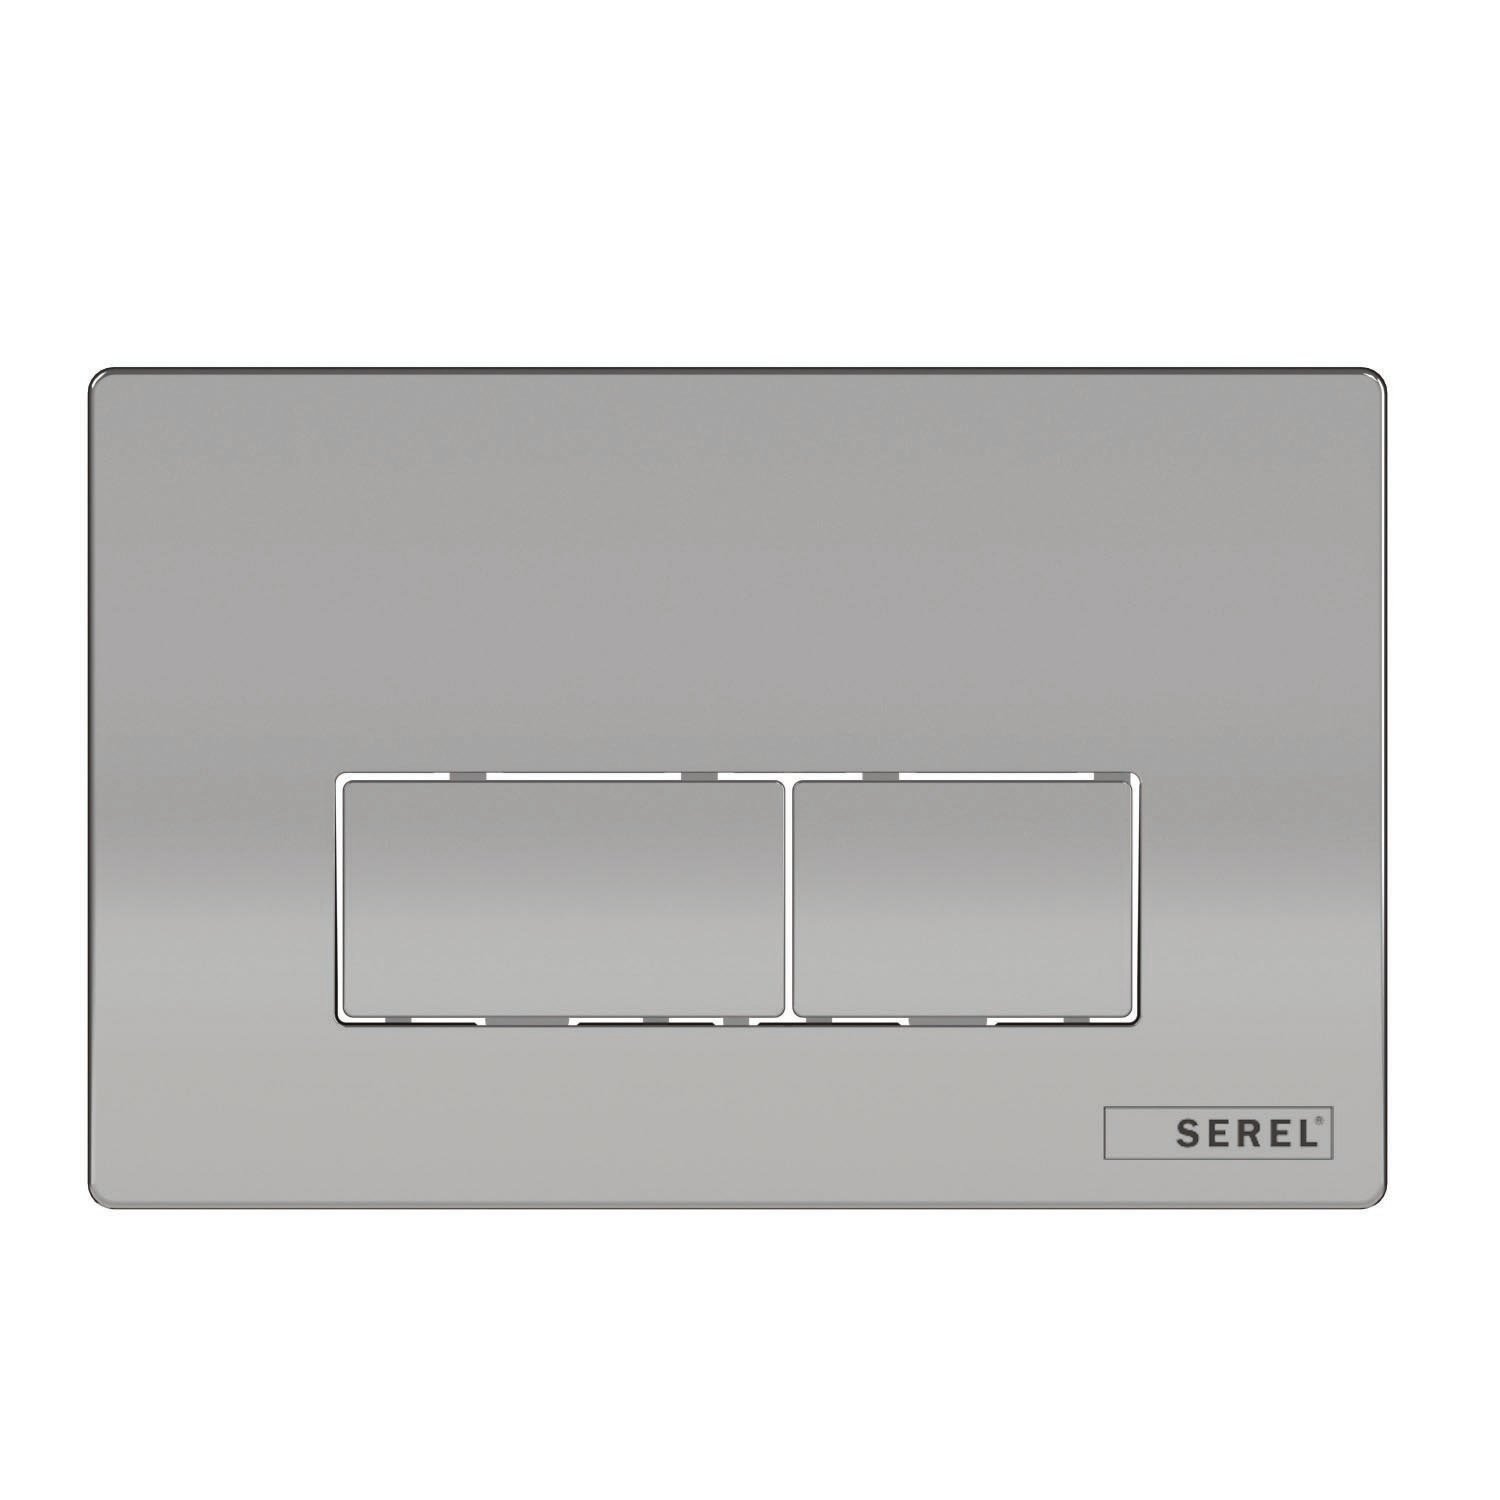 Serel Bright Chrome Control Panel Metal Coating P580120